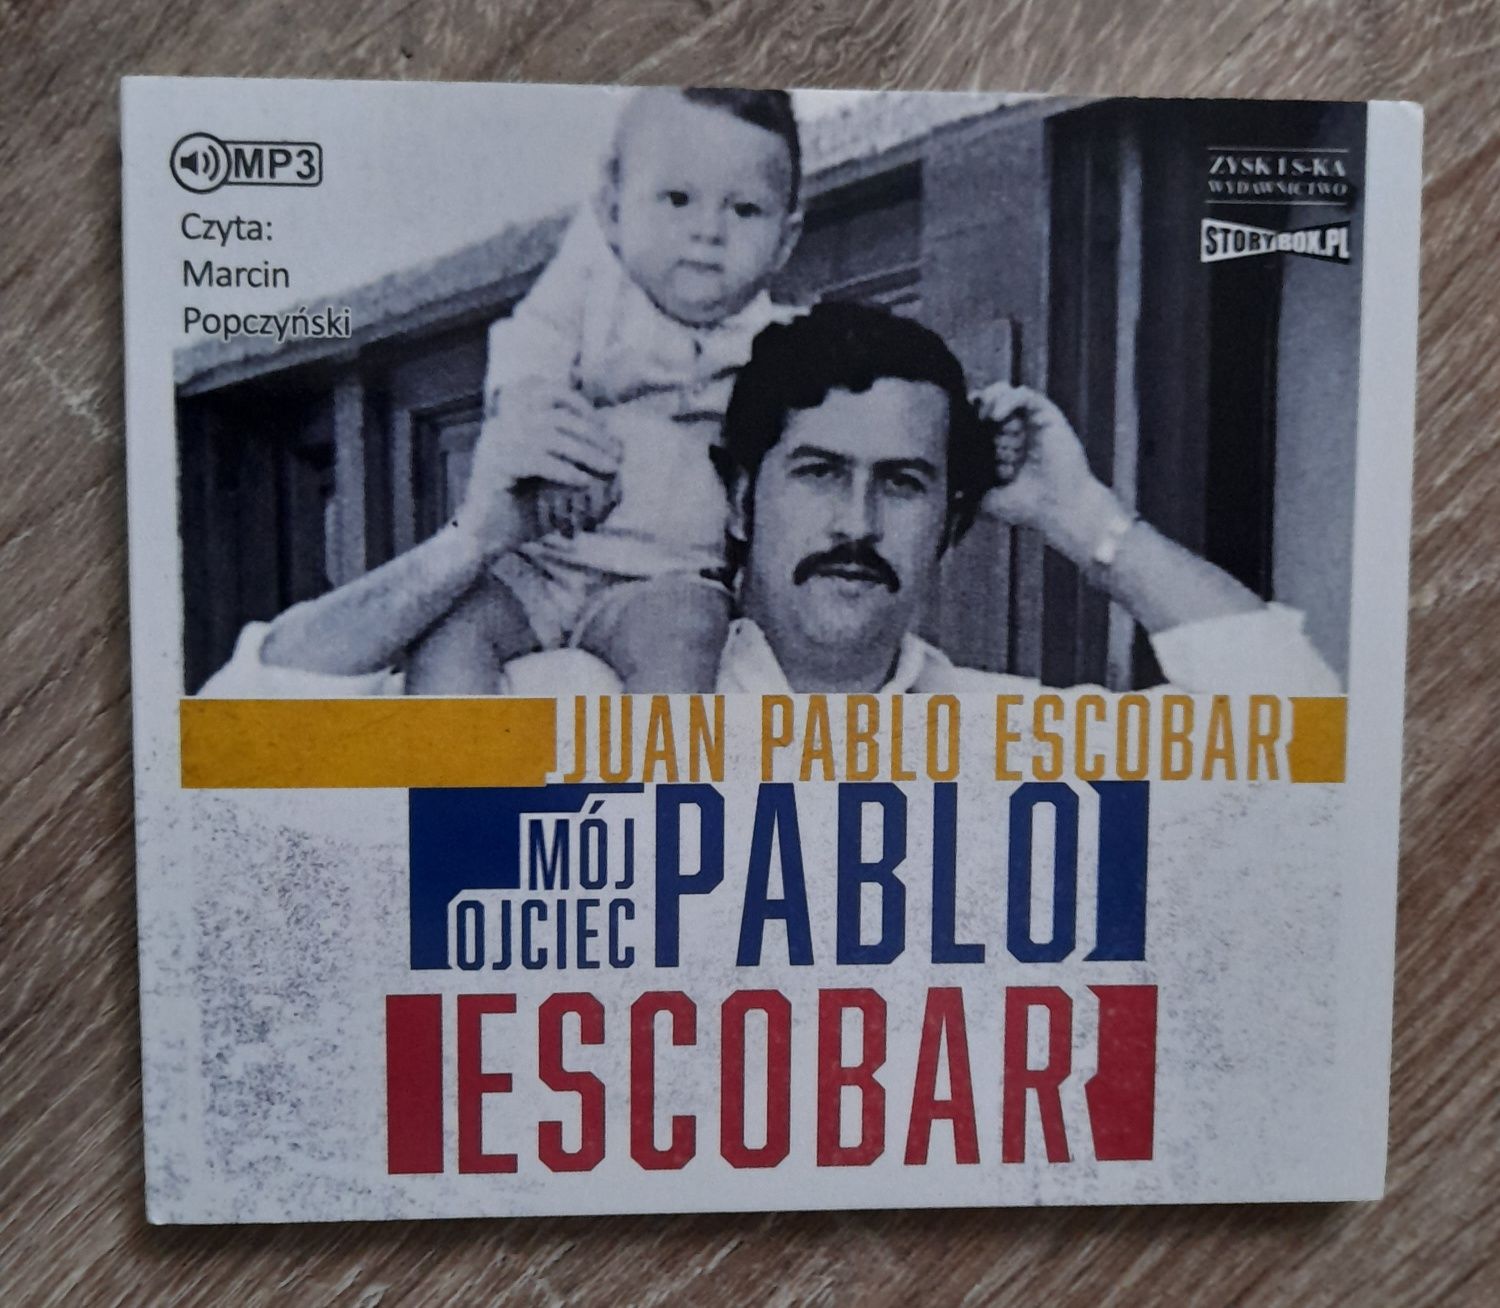 Audiobook Mój ojciec Pablo Escobar